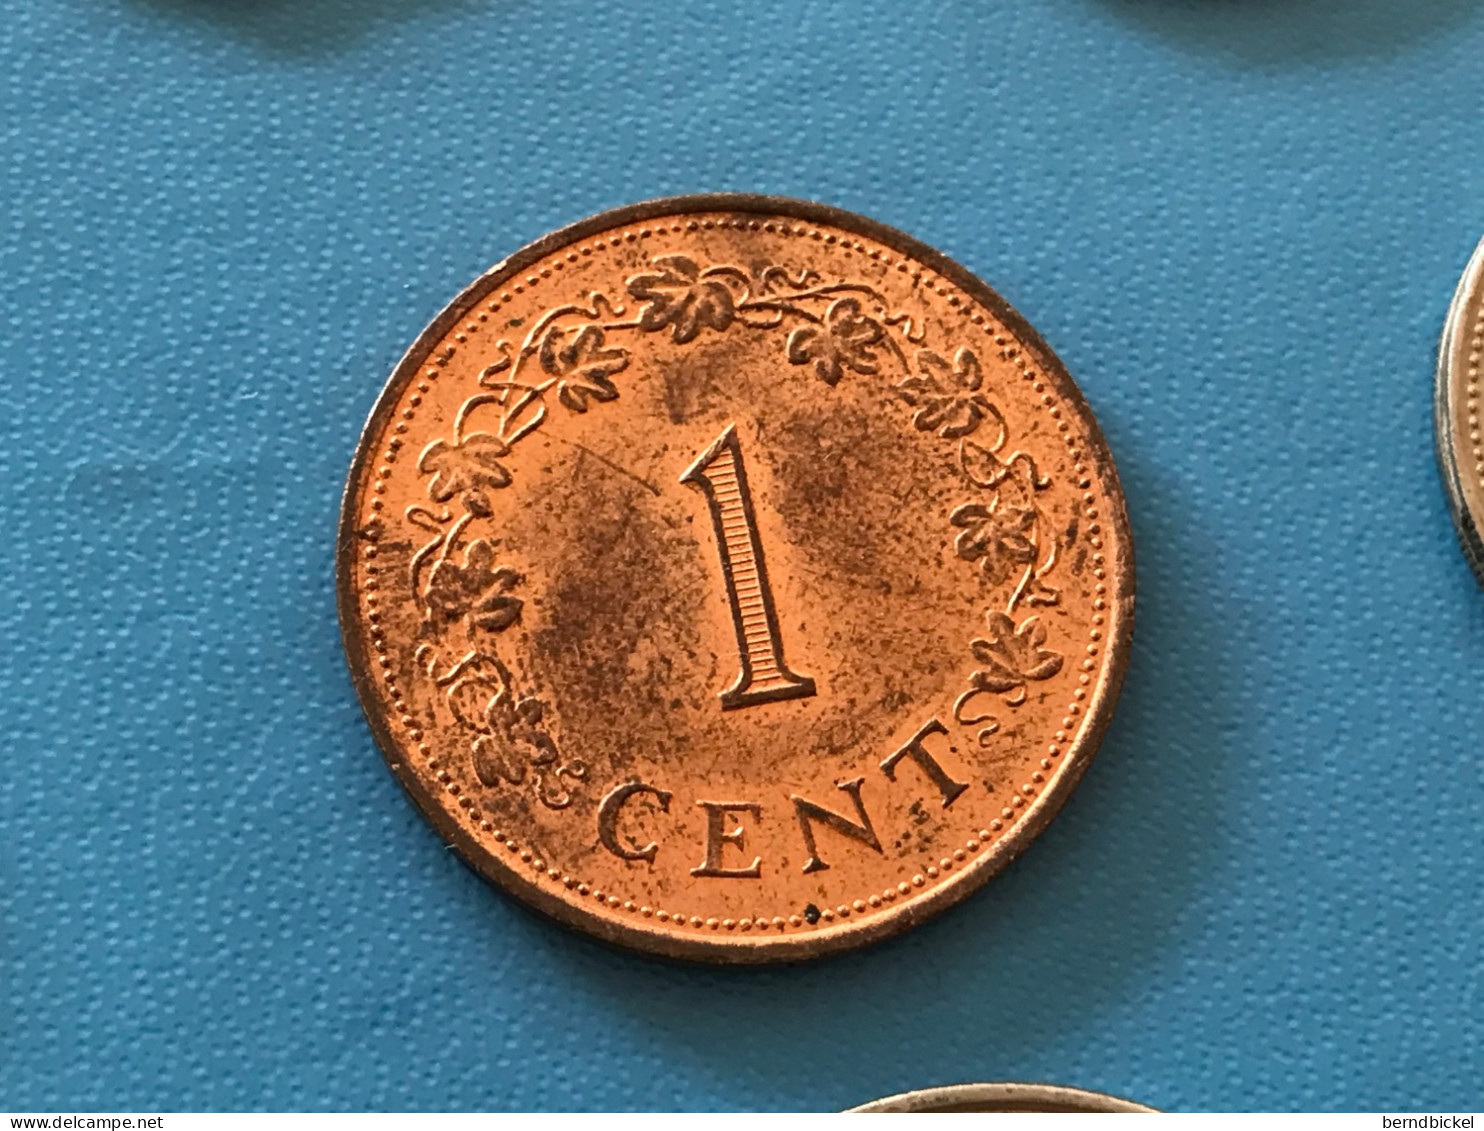 Münze Münzen Umlaufmünze Malta 1 Cent 1977 - Malta